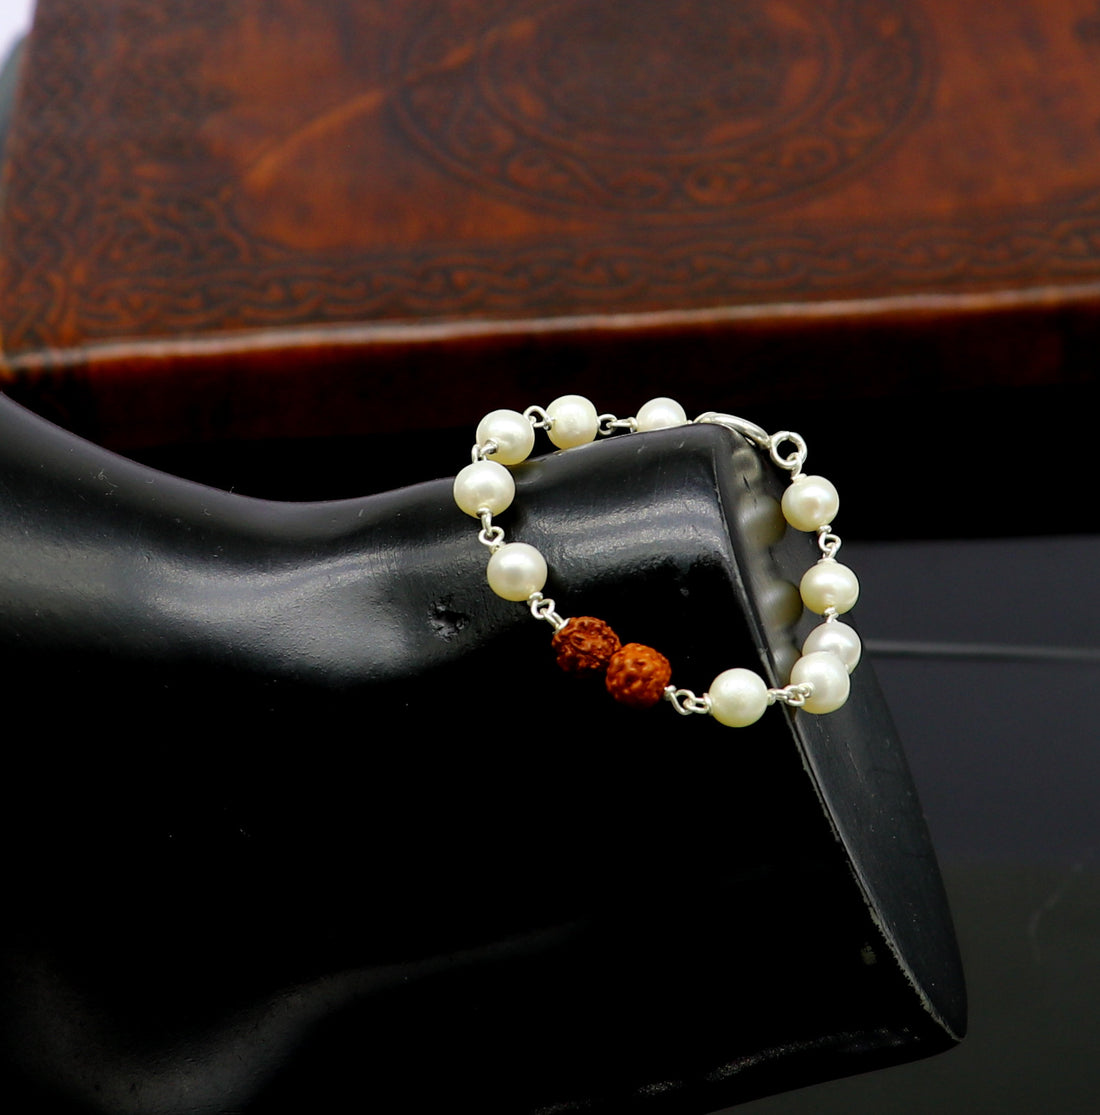 925 sterling silver handmade fabulous natural white pearl beaded baby bracelet with rudraksha, best gift for kids bracelets jewelry bbr02 - TRIBAL ORNAMENTS